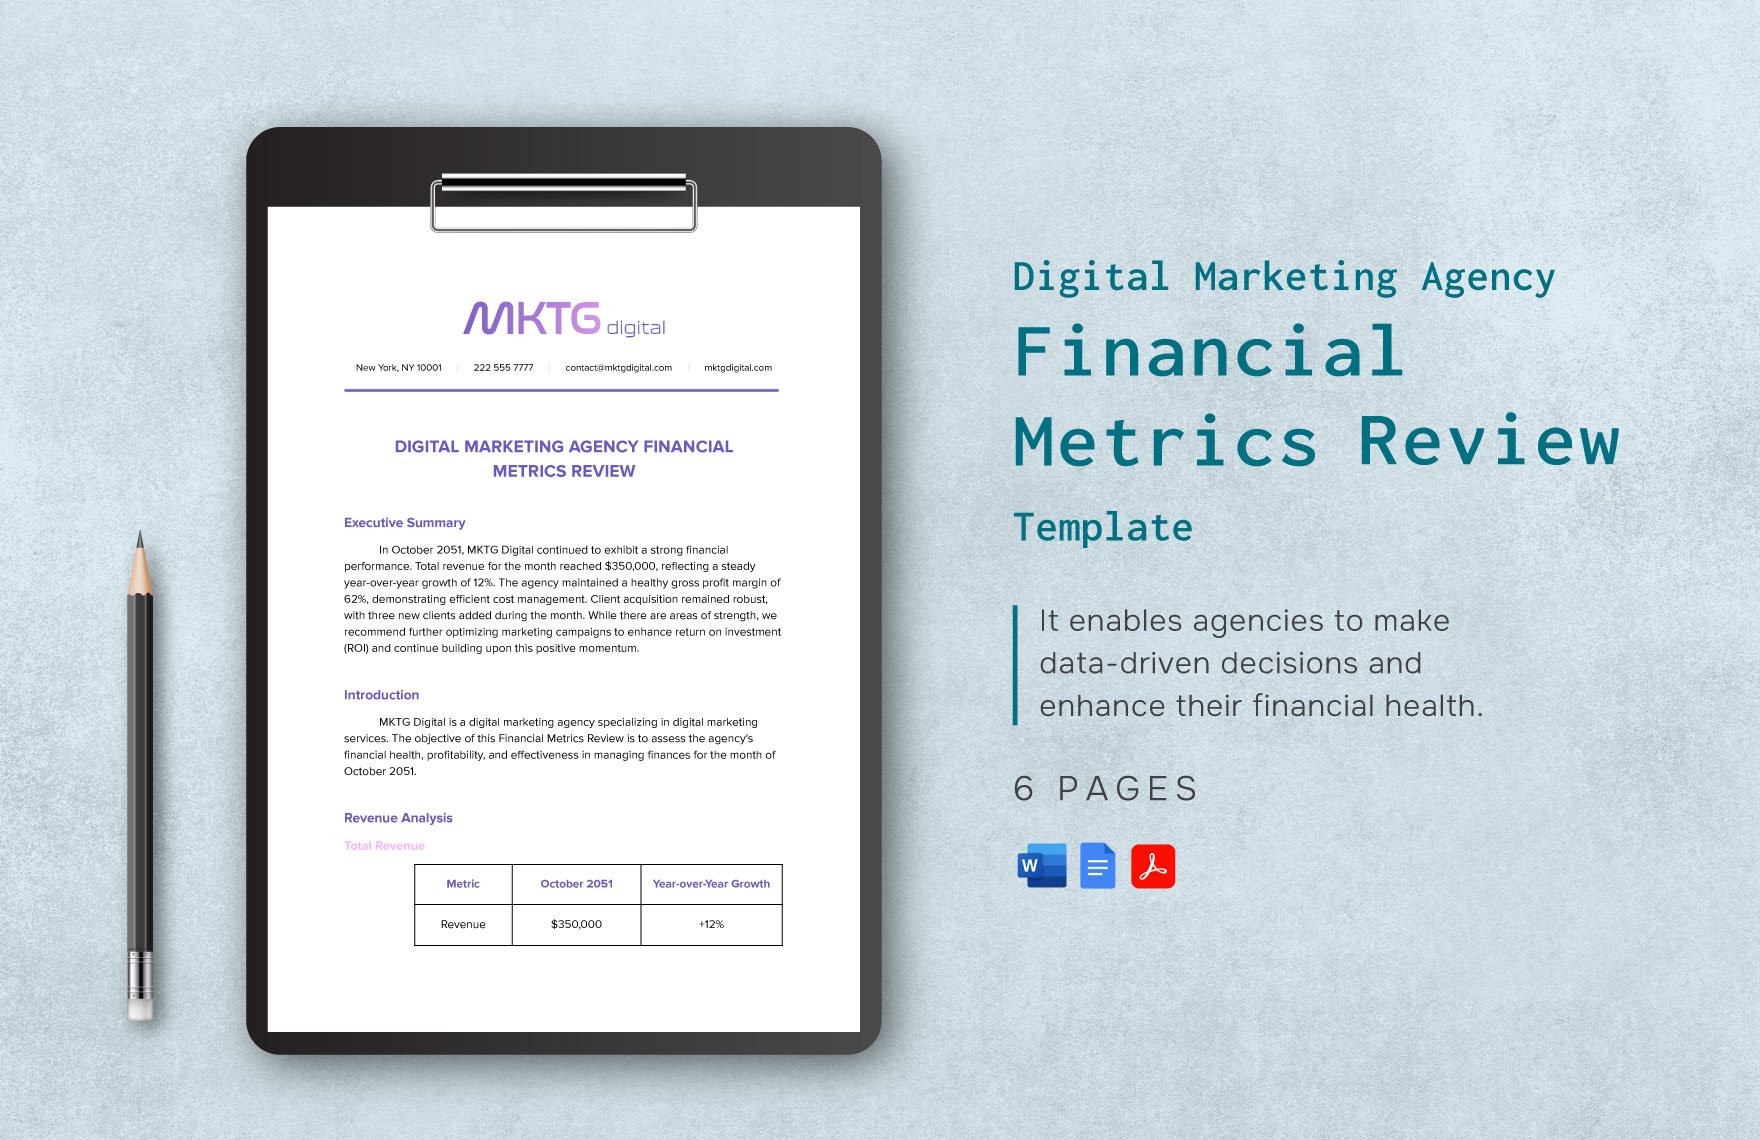 Digital Marketing Agency Financial Metrics Review Template